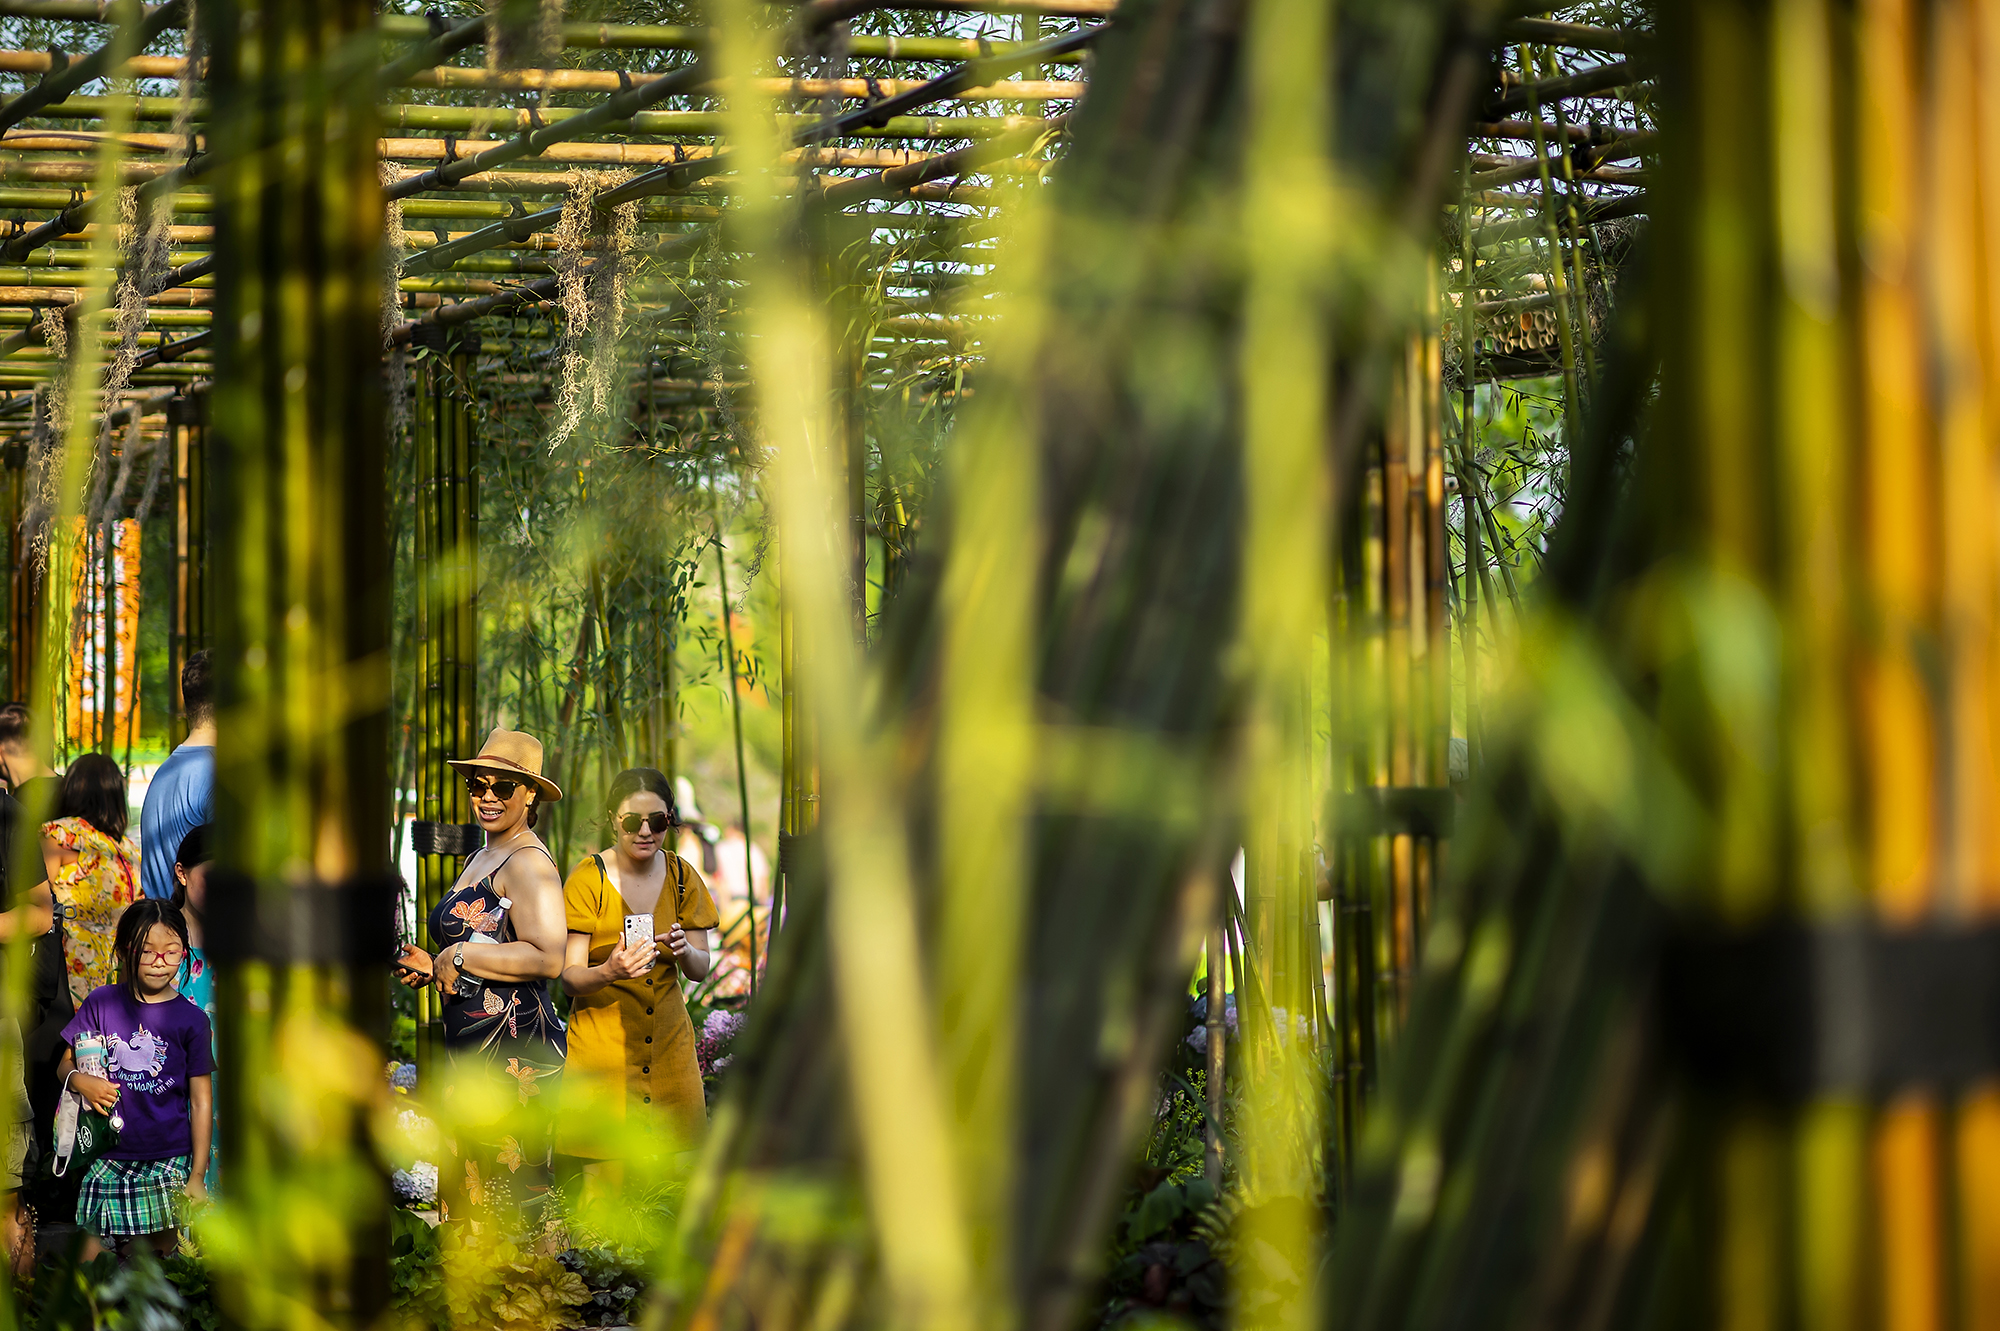 Guests walk through bamboo exhibit